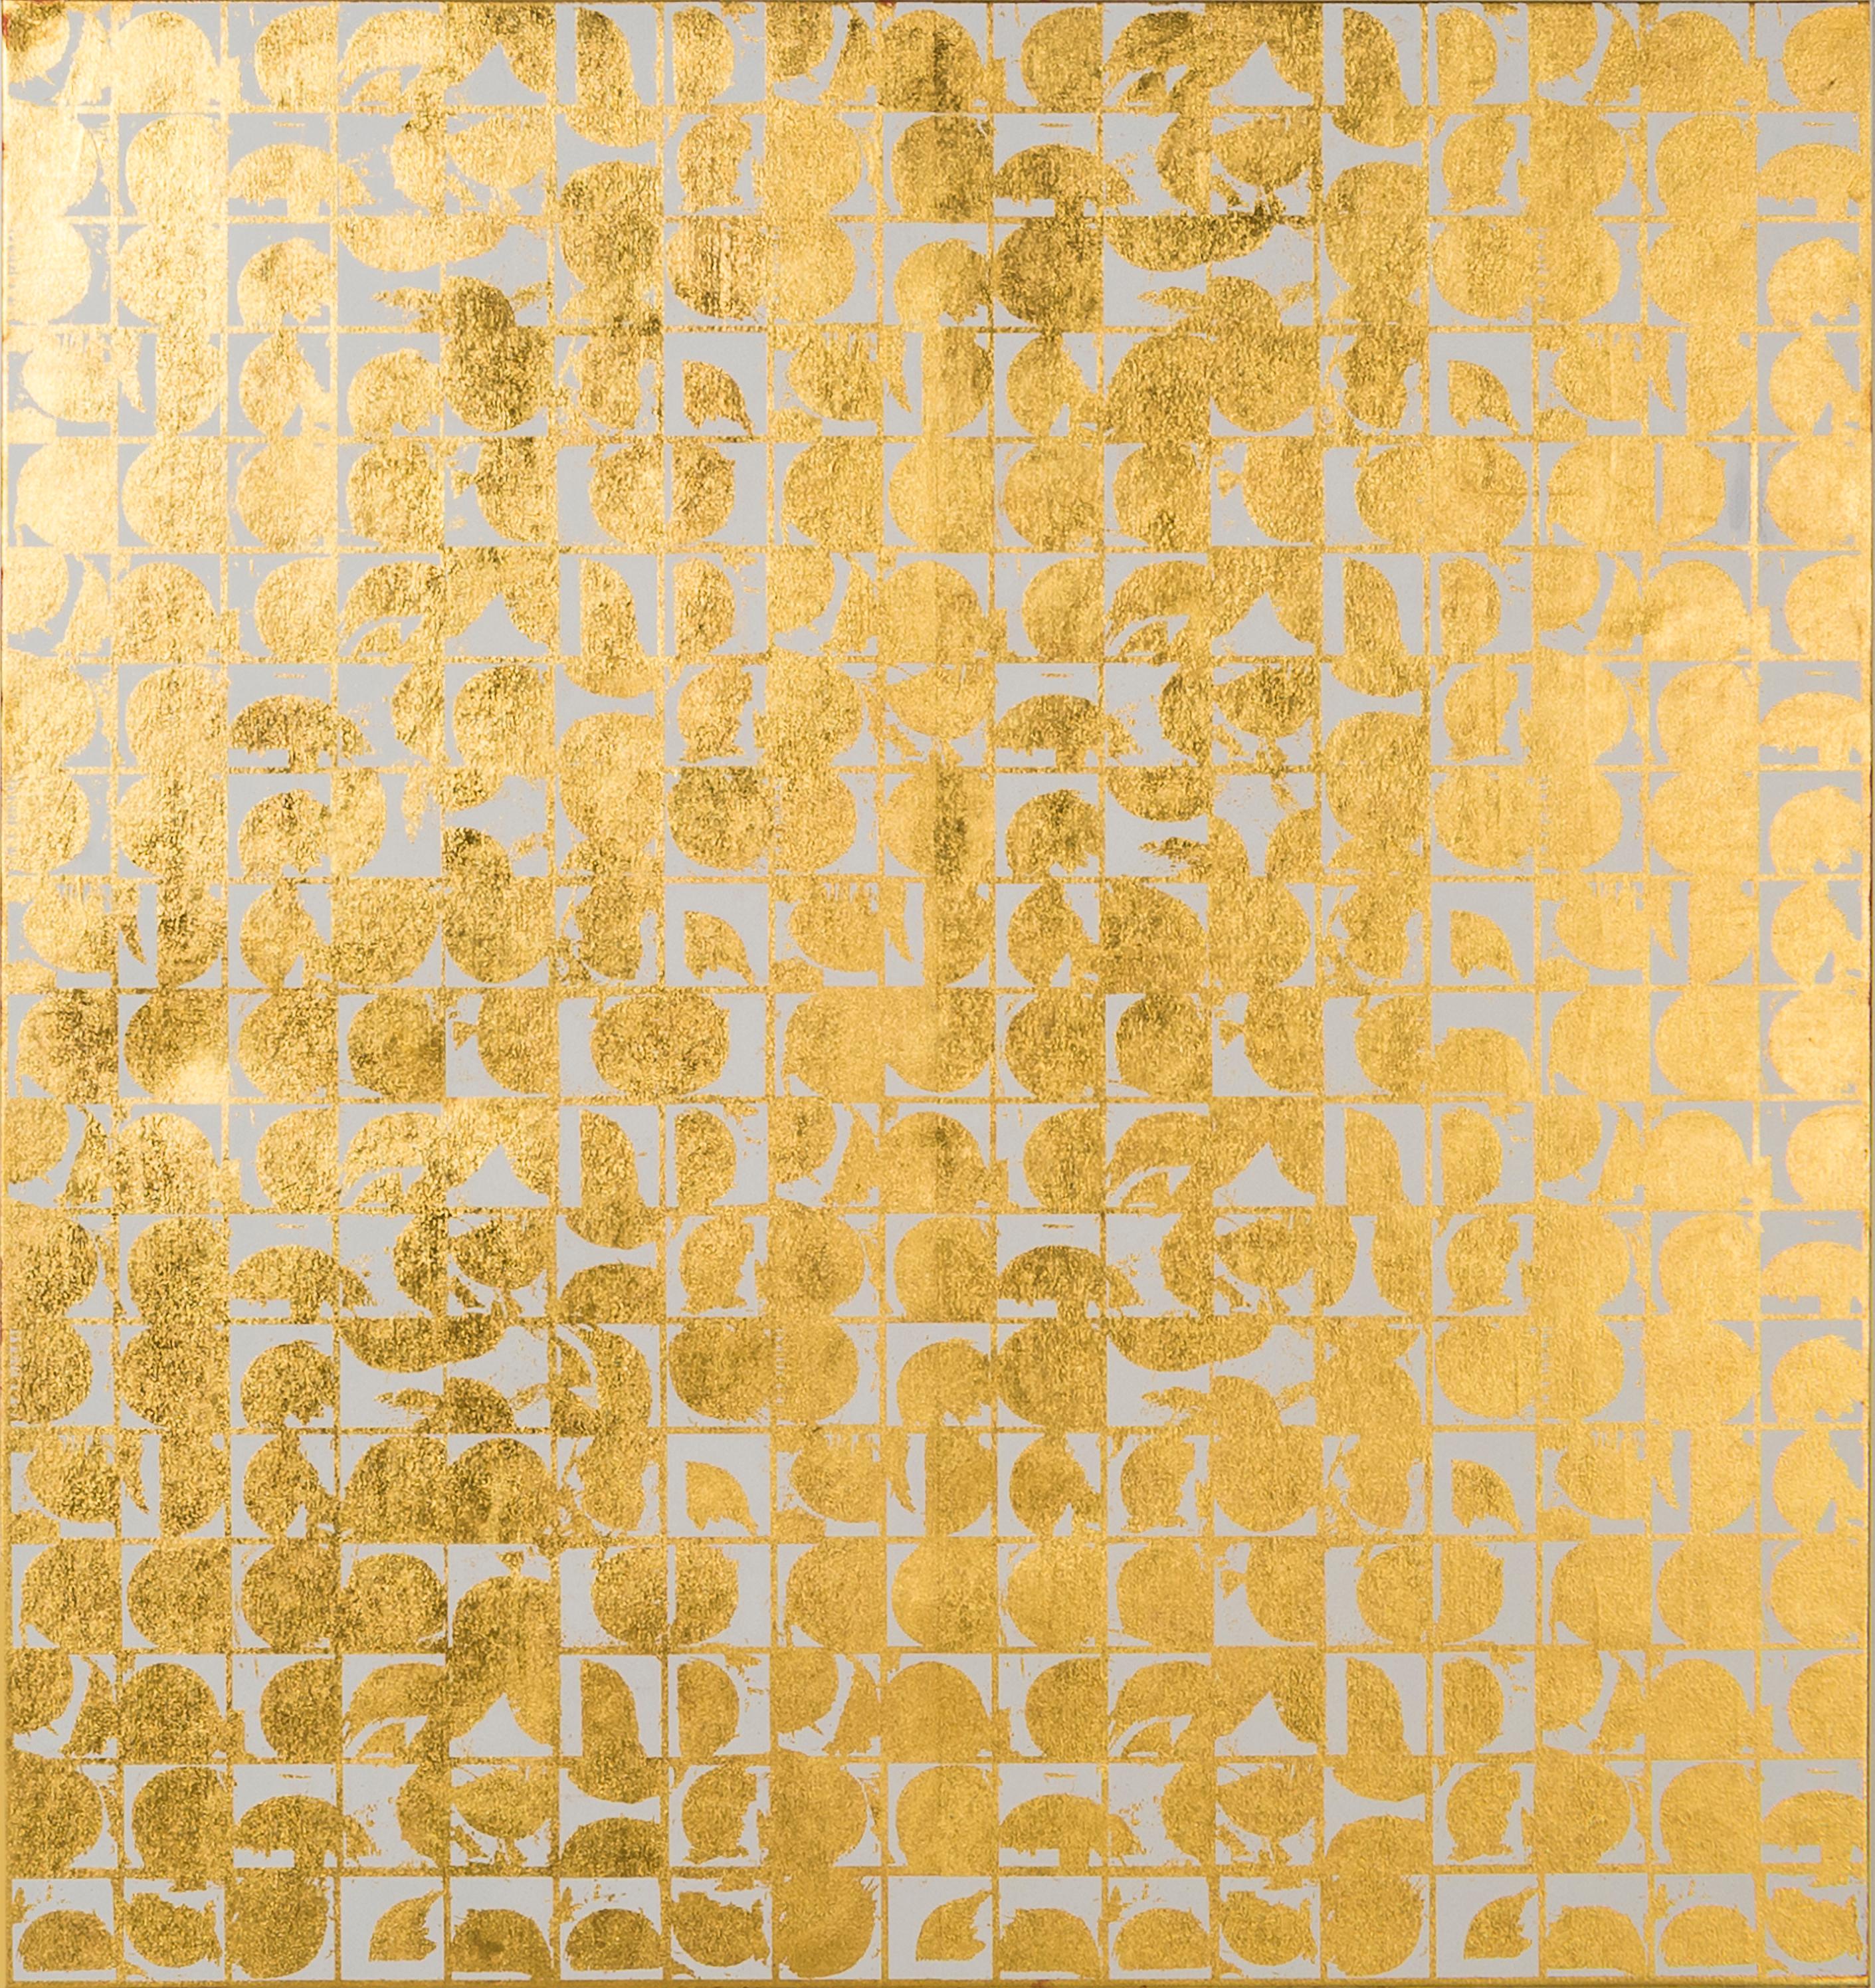 ROUNDS NEGATIVE CANVAS I (BONE) (design gold white metallic work on canvas) - Mixed Media Art by Lisa Hunt